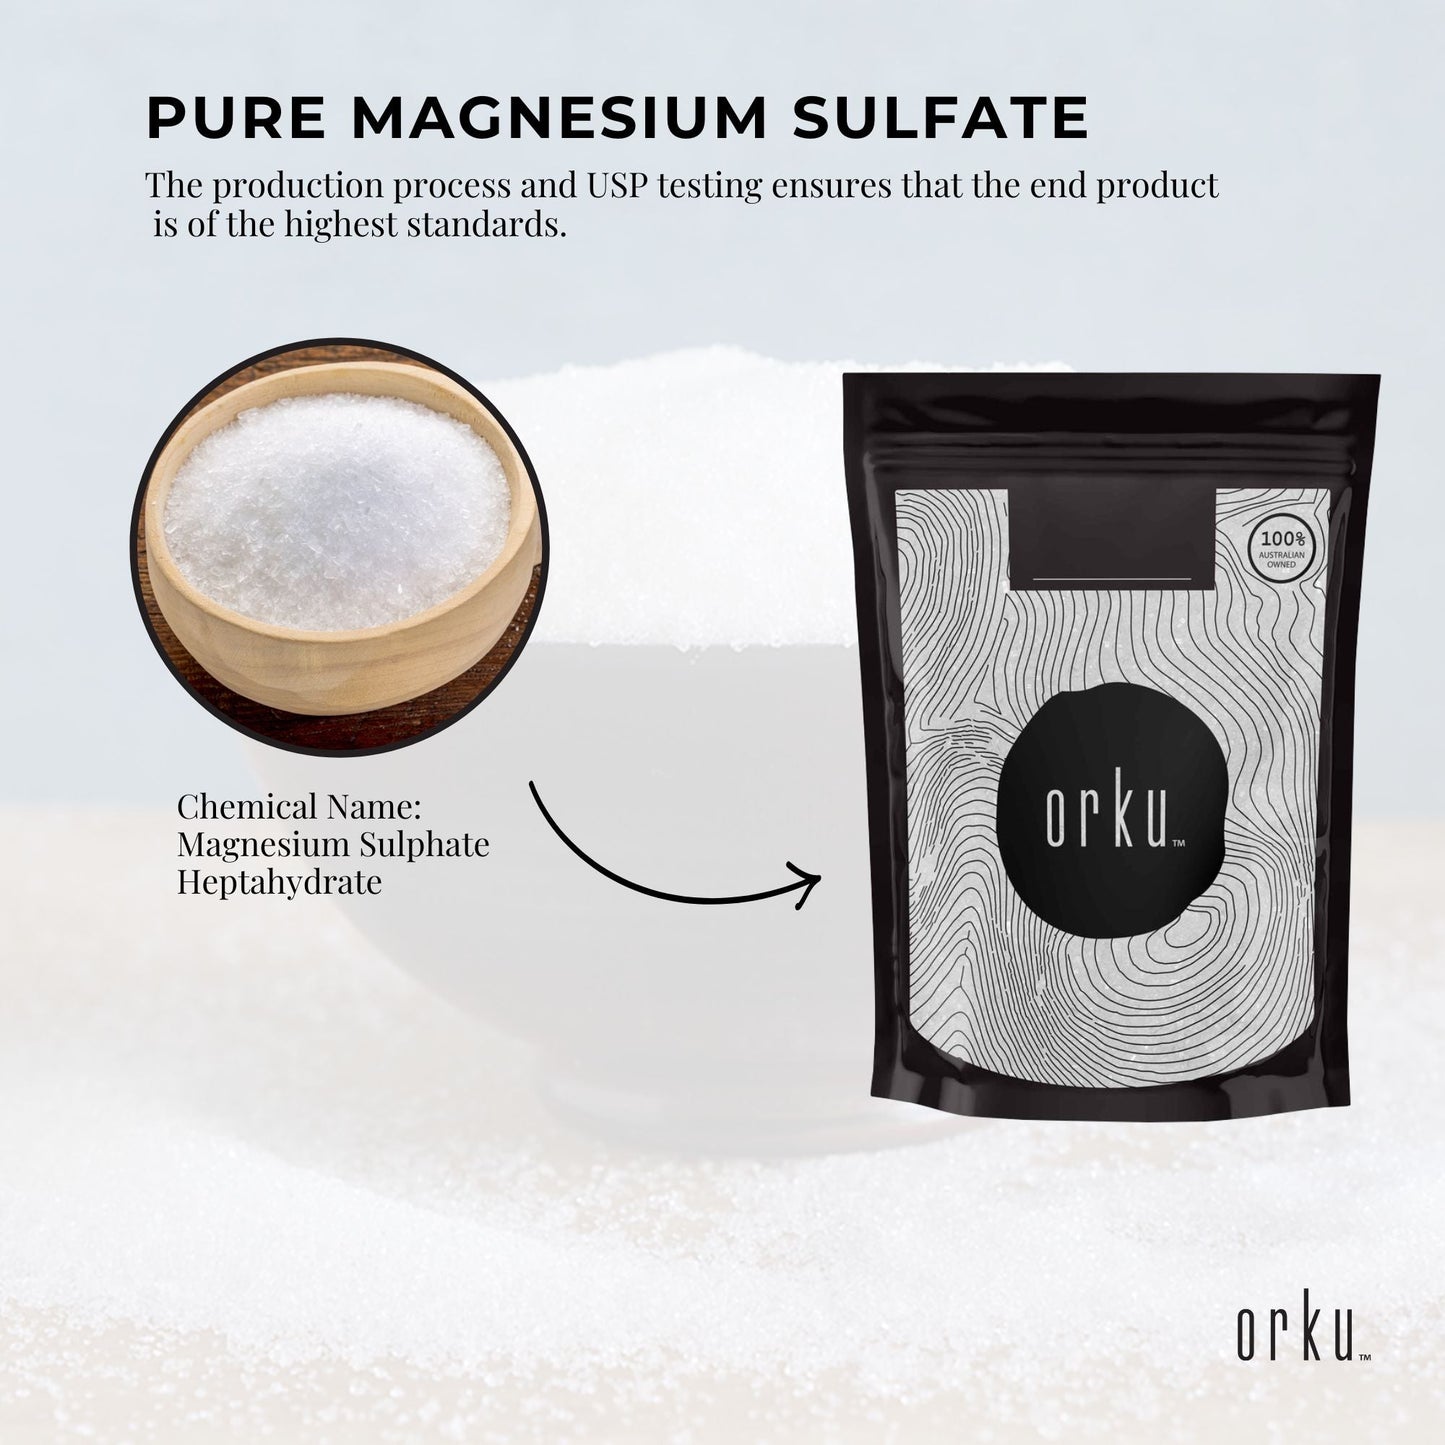 USP Epsom Salt Pharmaceutical Grade - Pure Magnesium Sulfate Bath Salts - Bulk